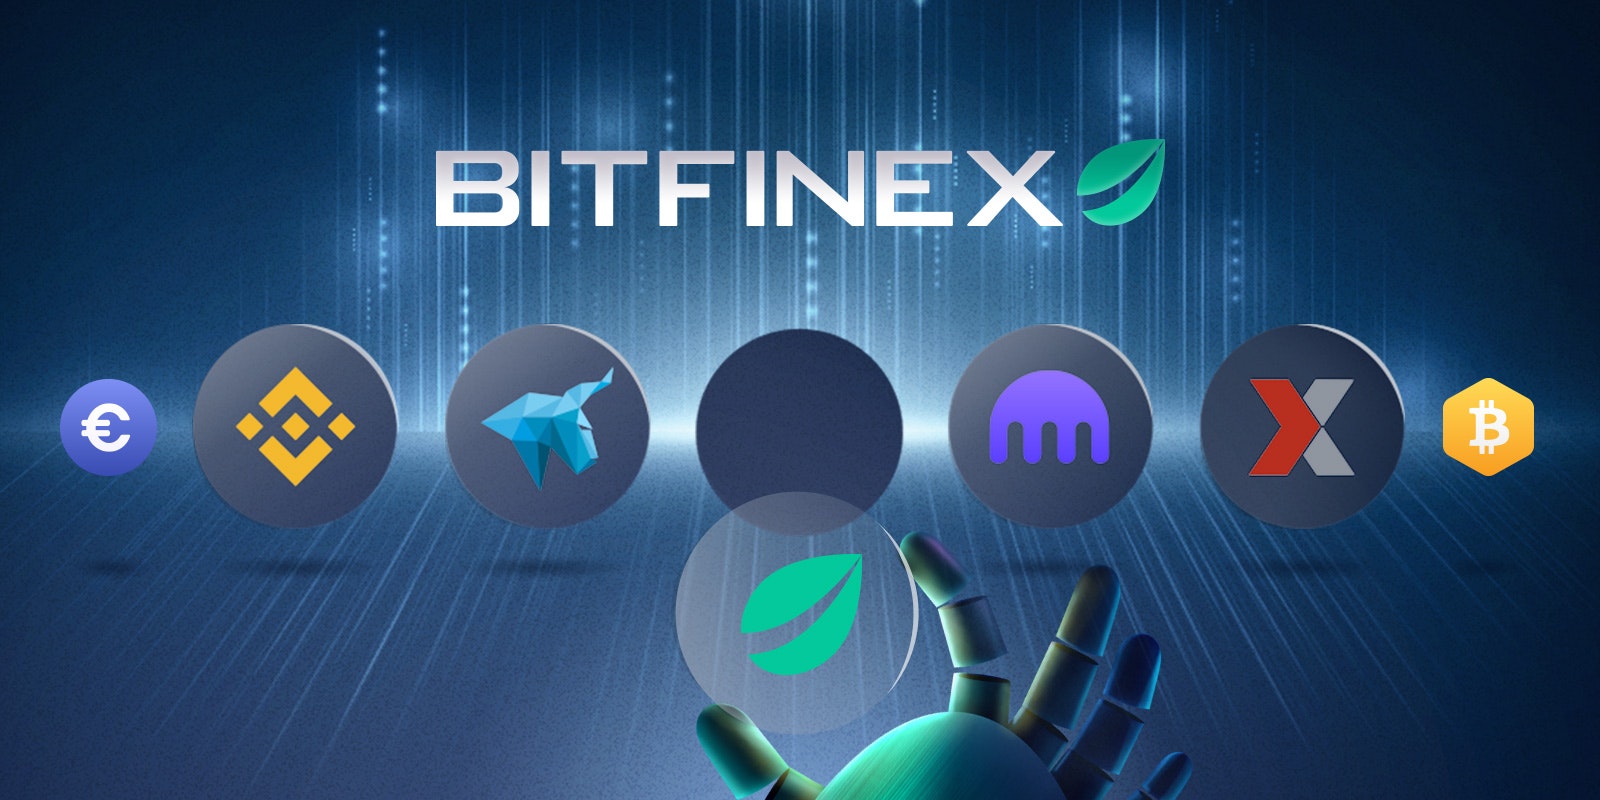 Bitfinex added to Smart Engine